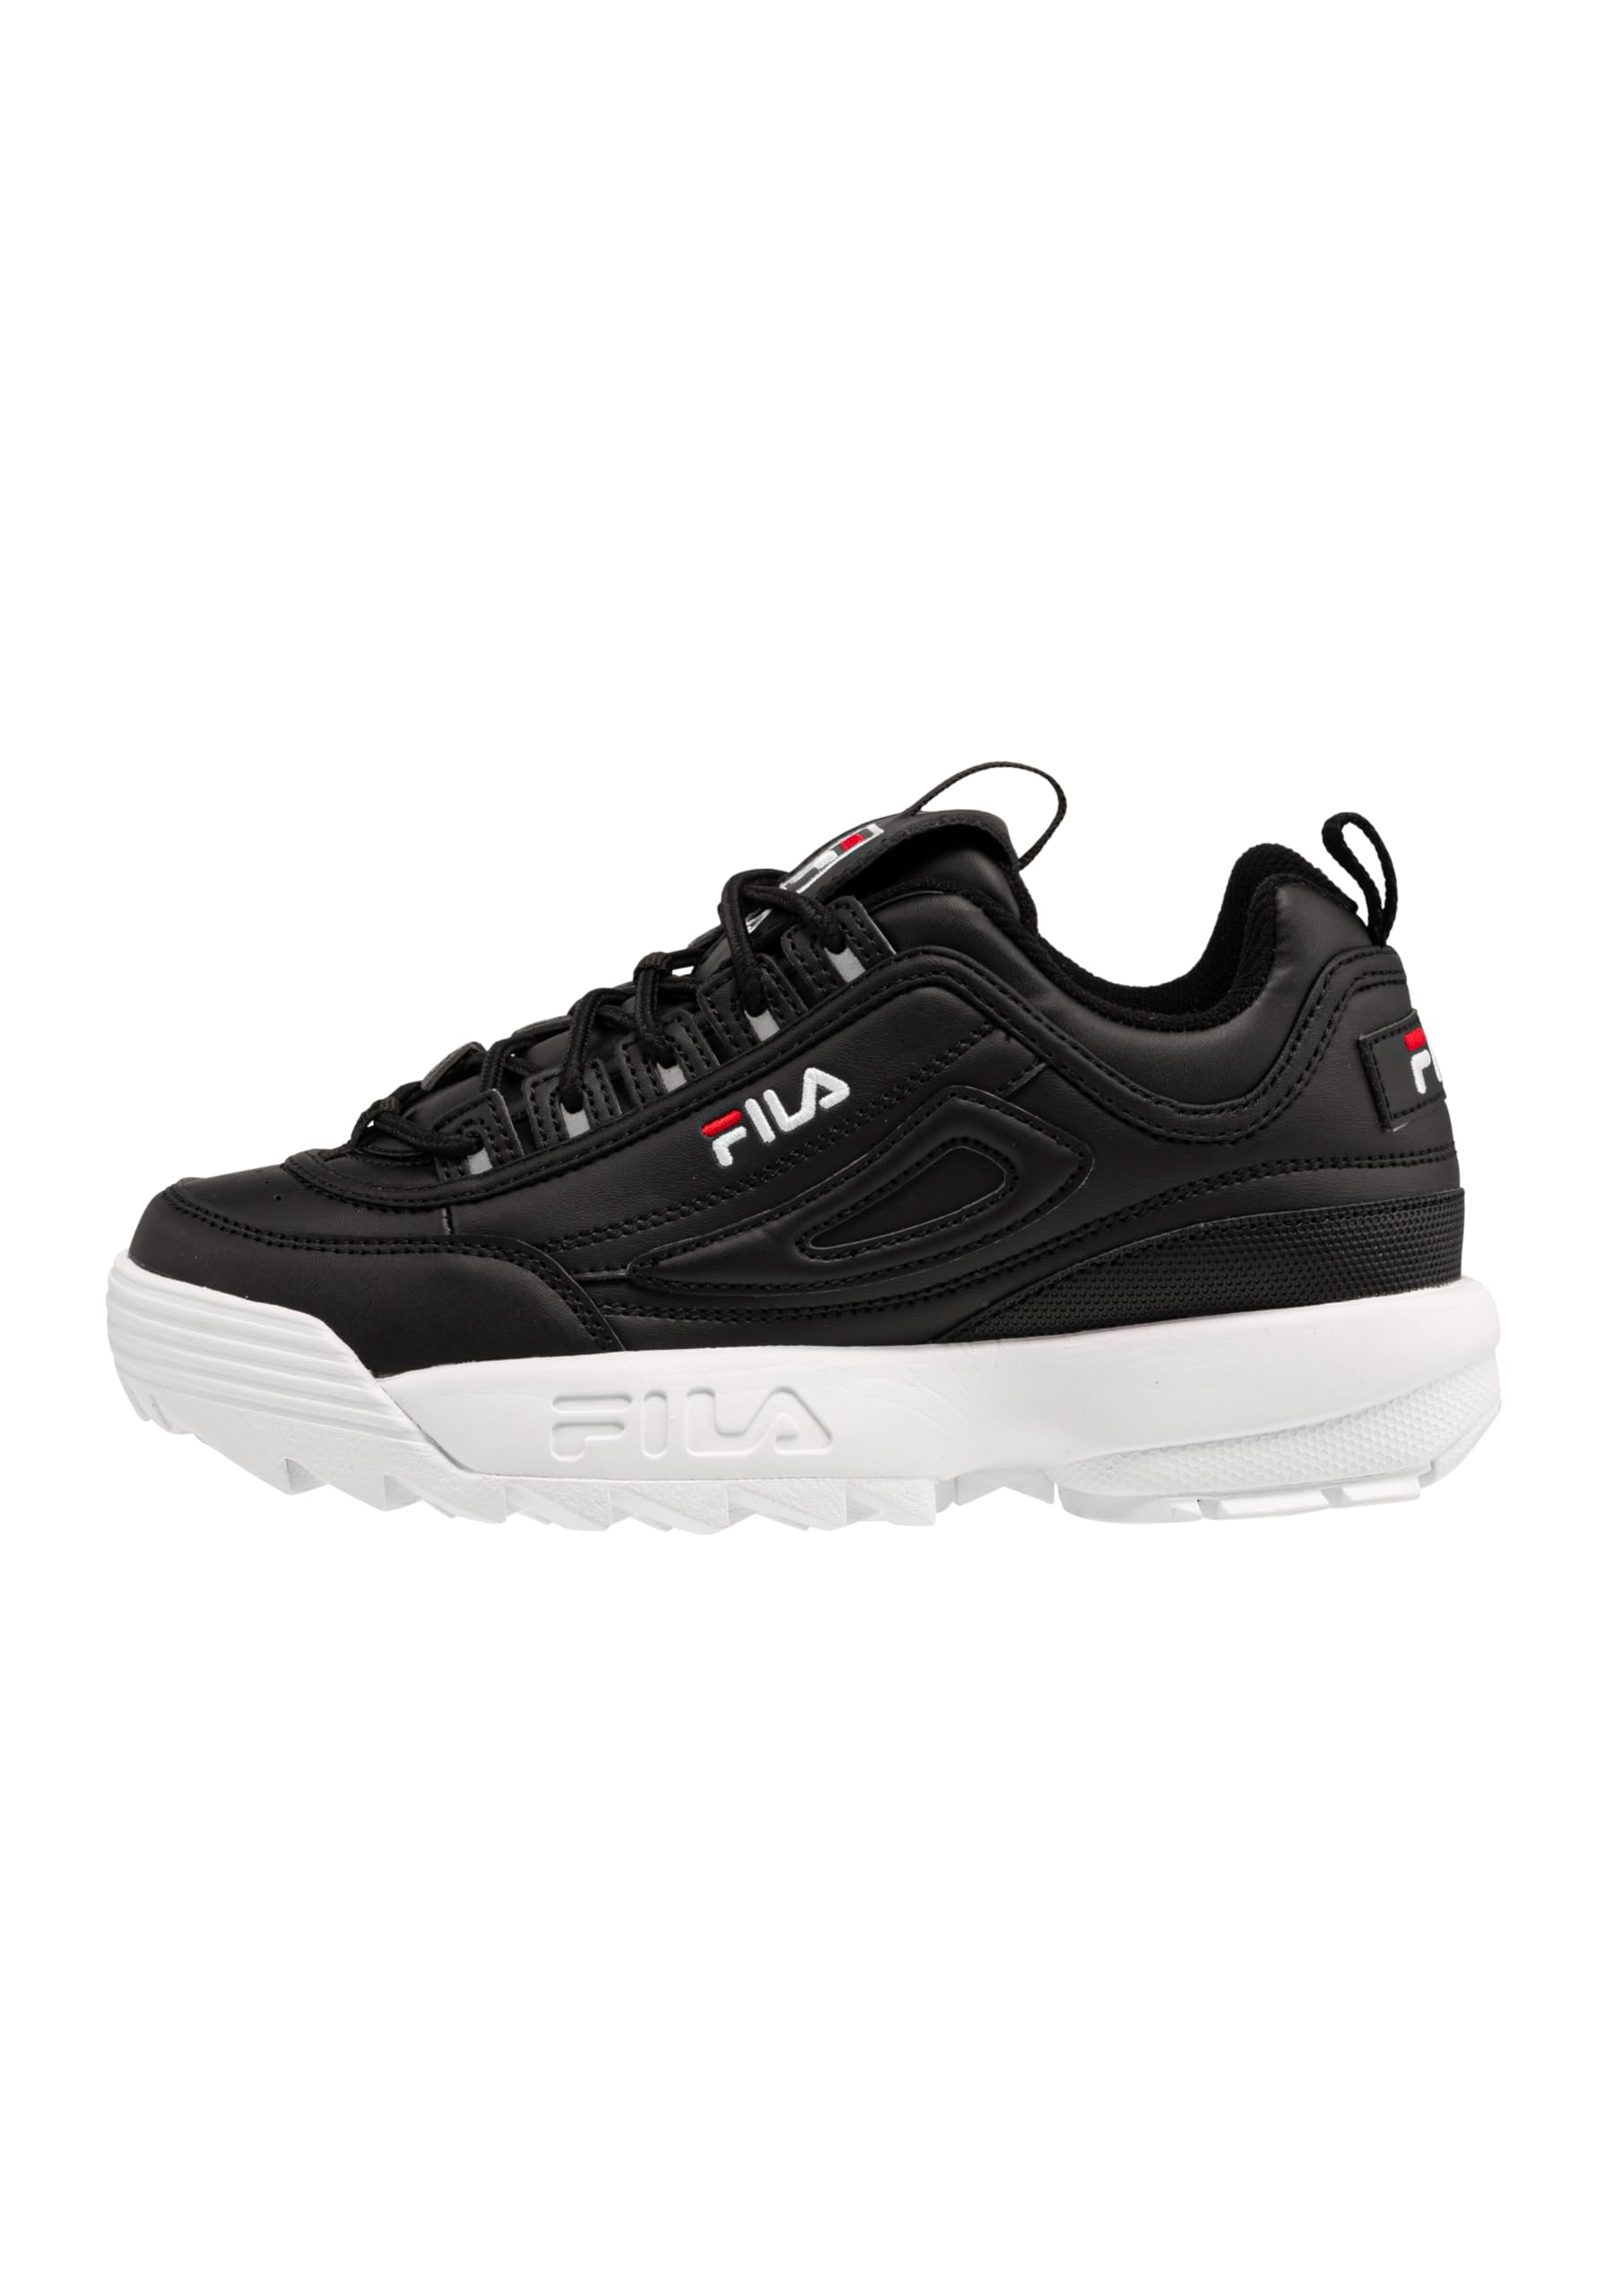 FILA Damen Disruptor wmn Sneaker, Black, 36 EU